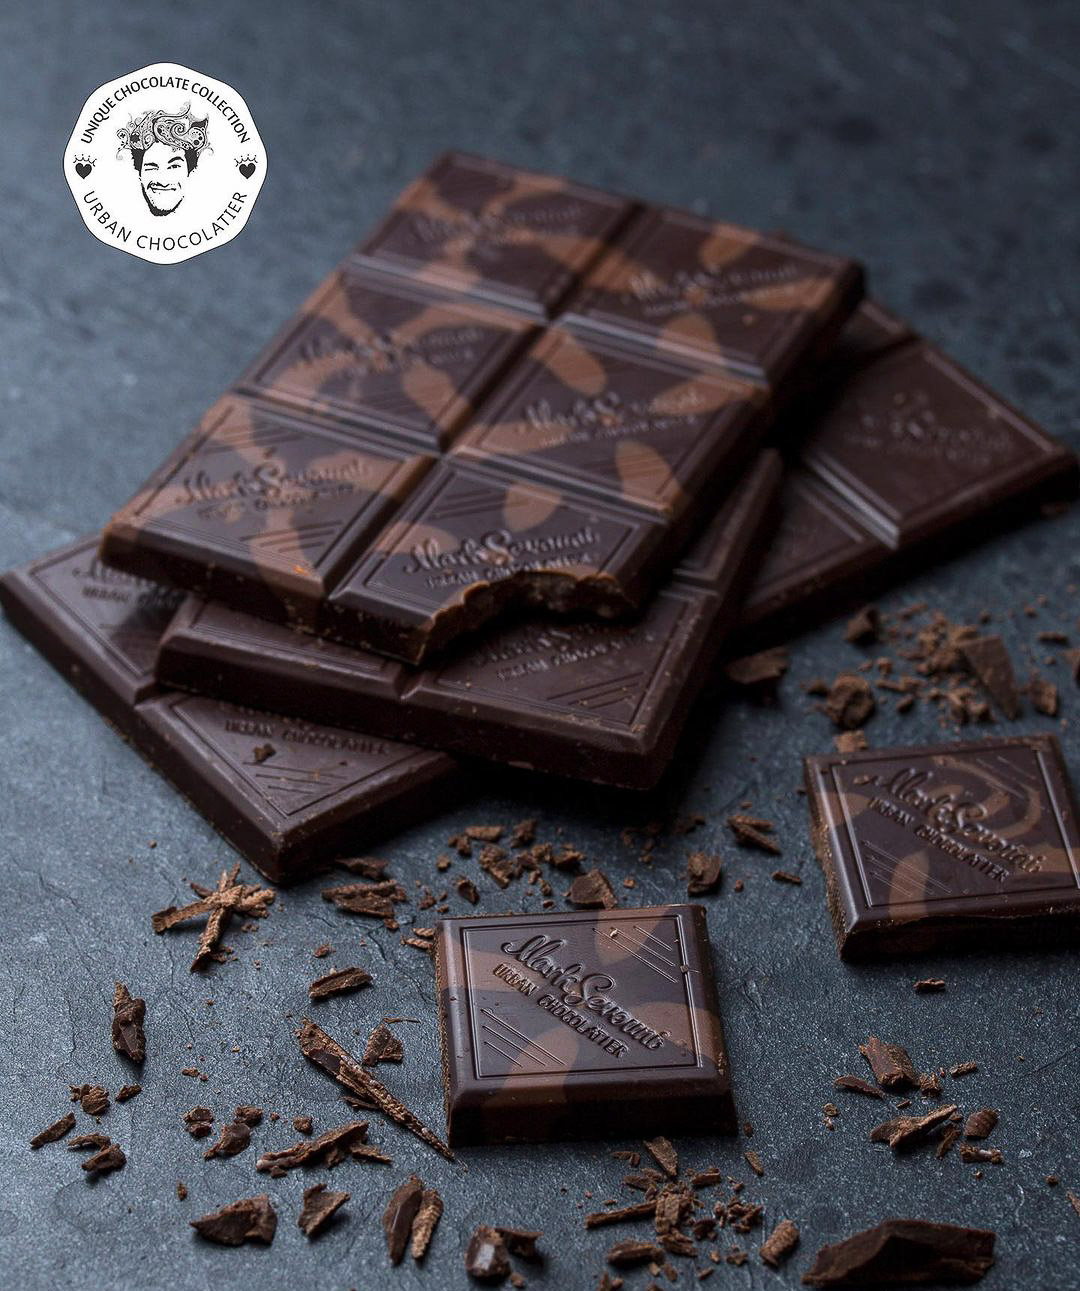 Chocolate `Mark Sevouni` dark and milk chocolate 82%